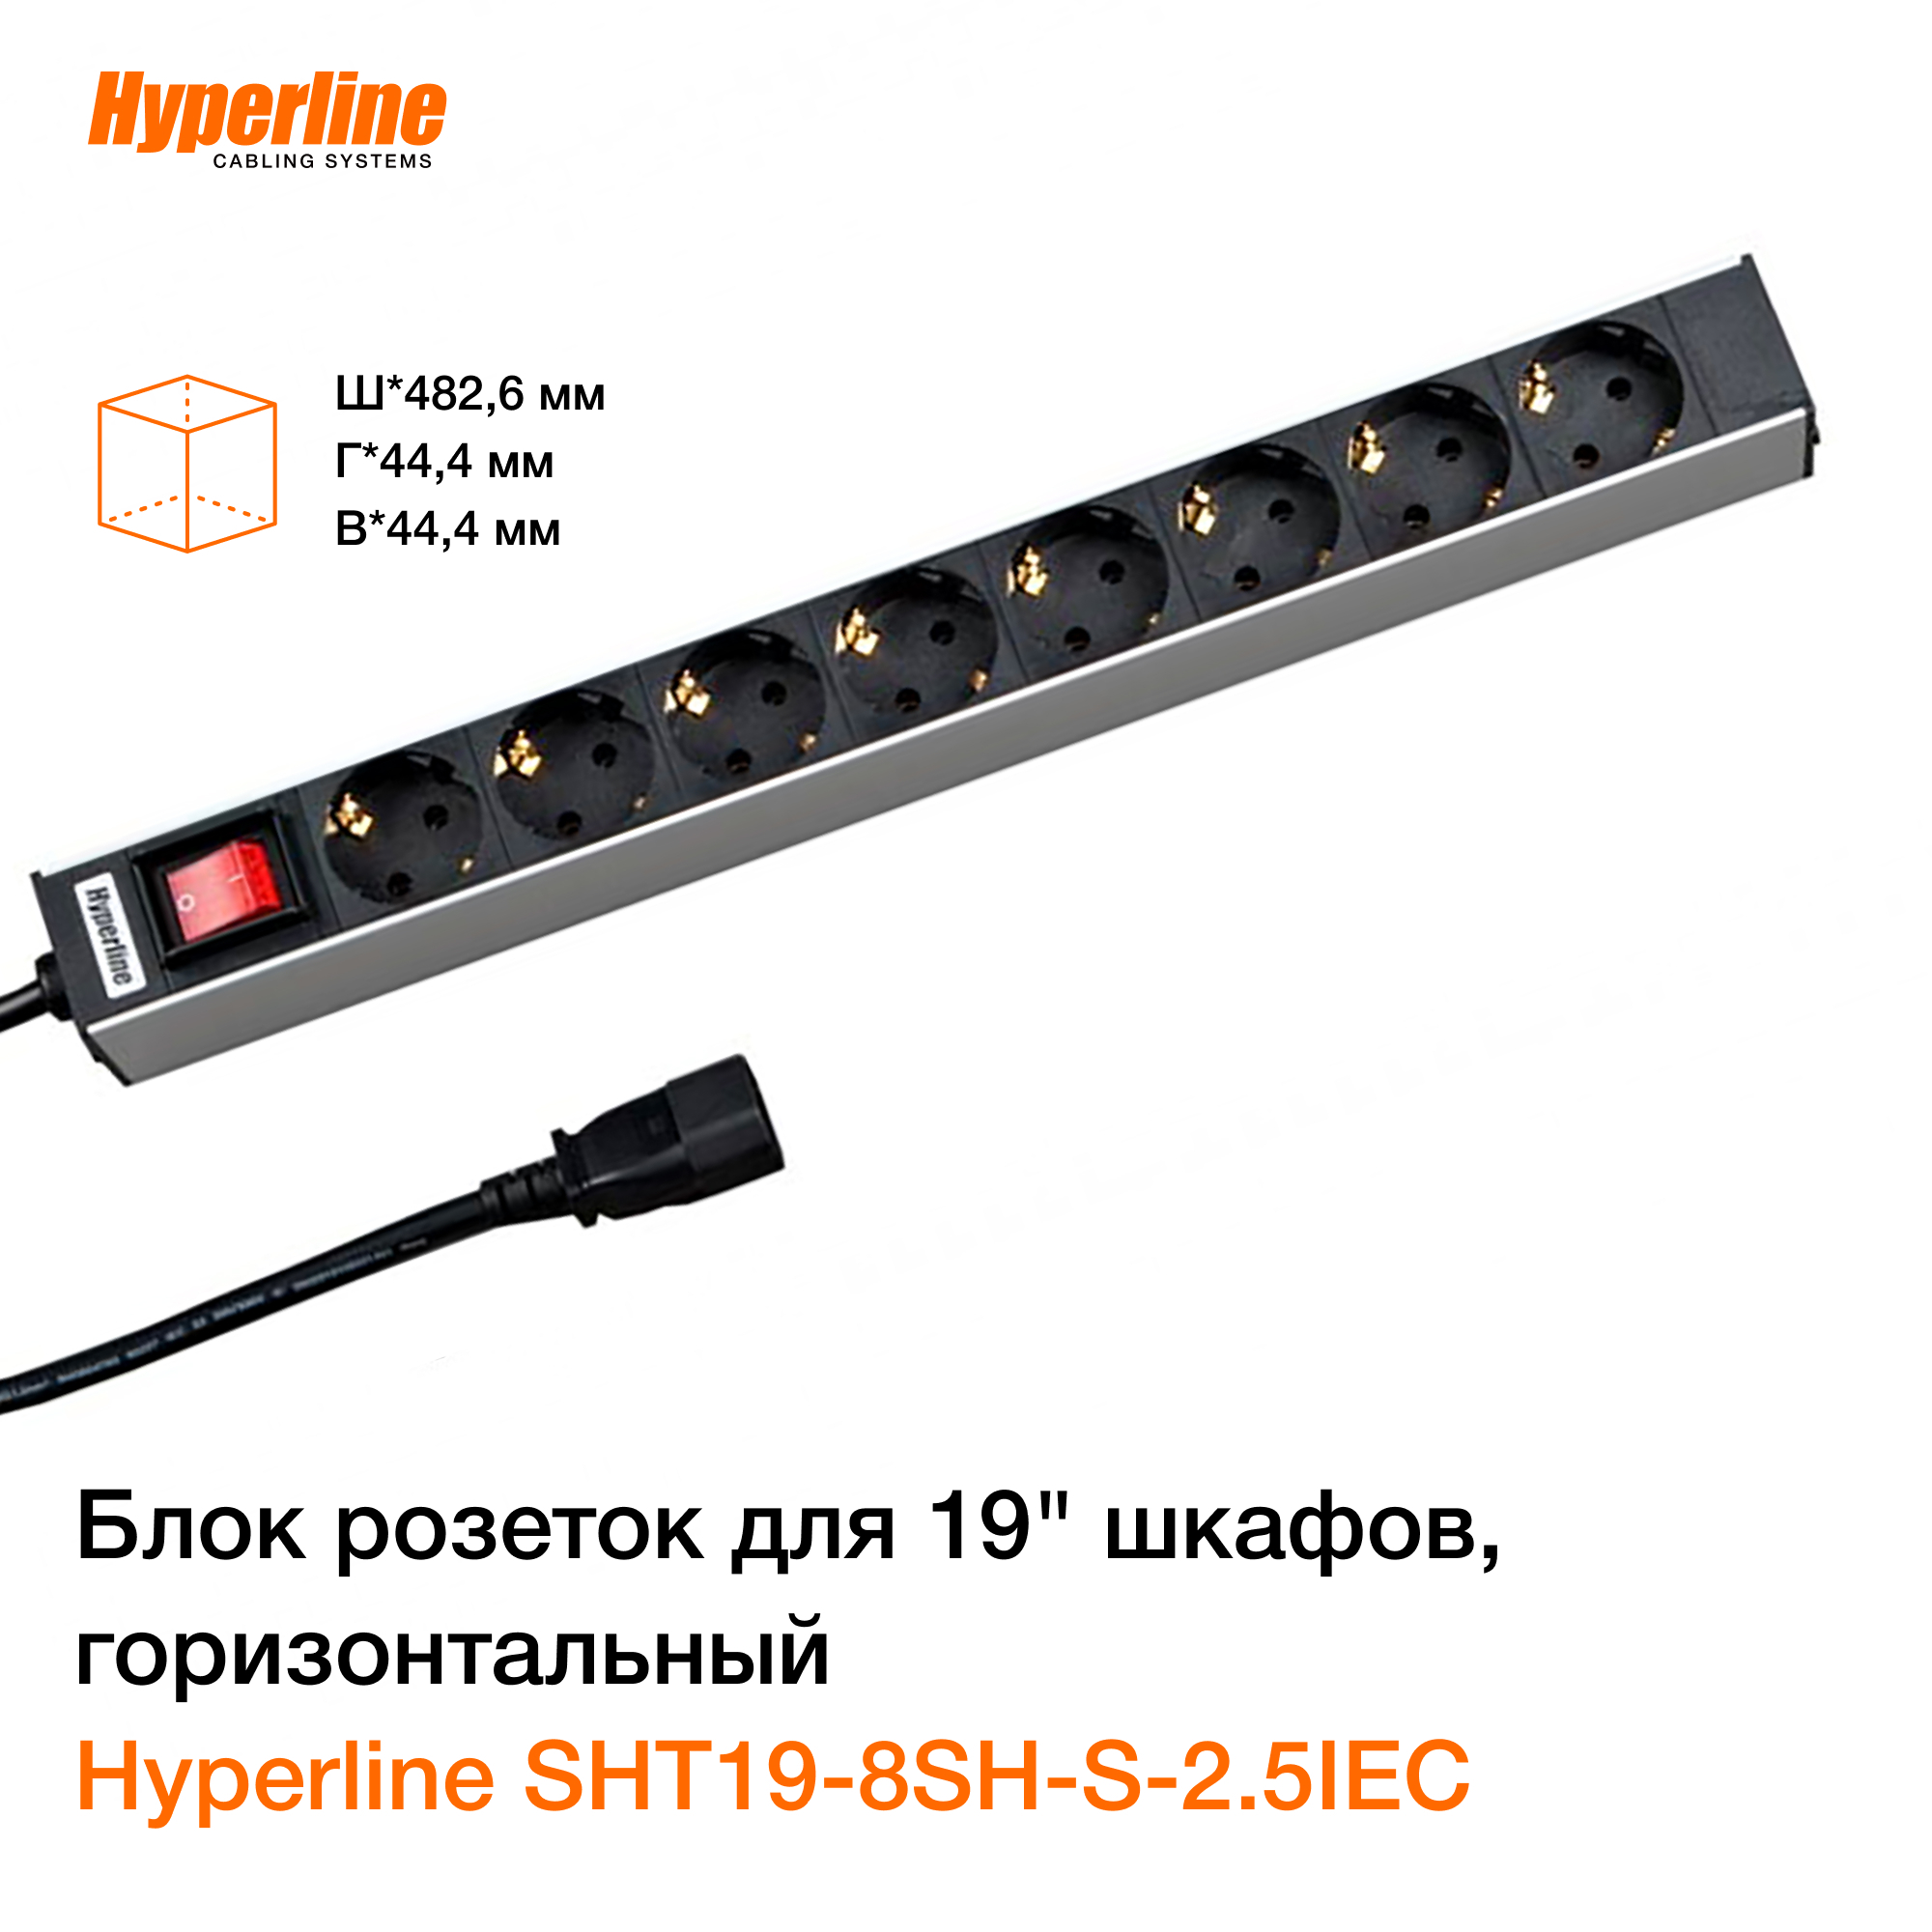 Hyperline sht19-8sh-s-2.5IEC блок силовых розеток